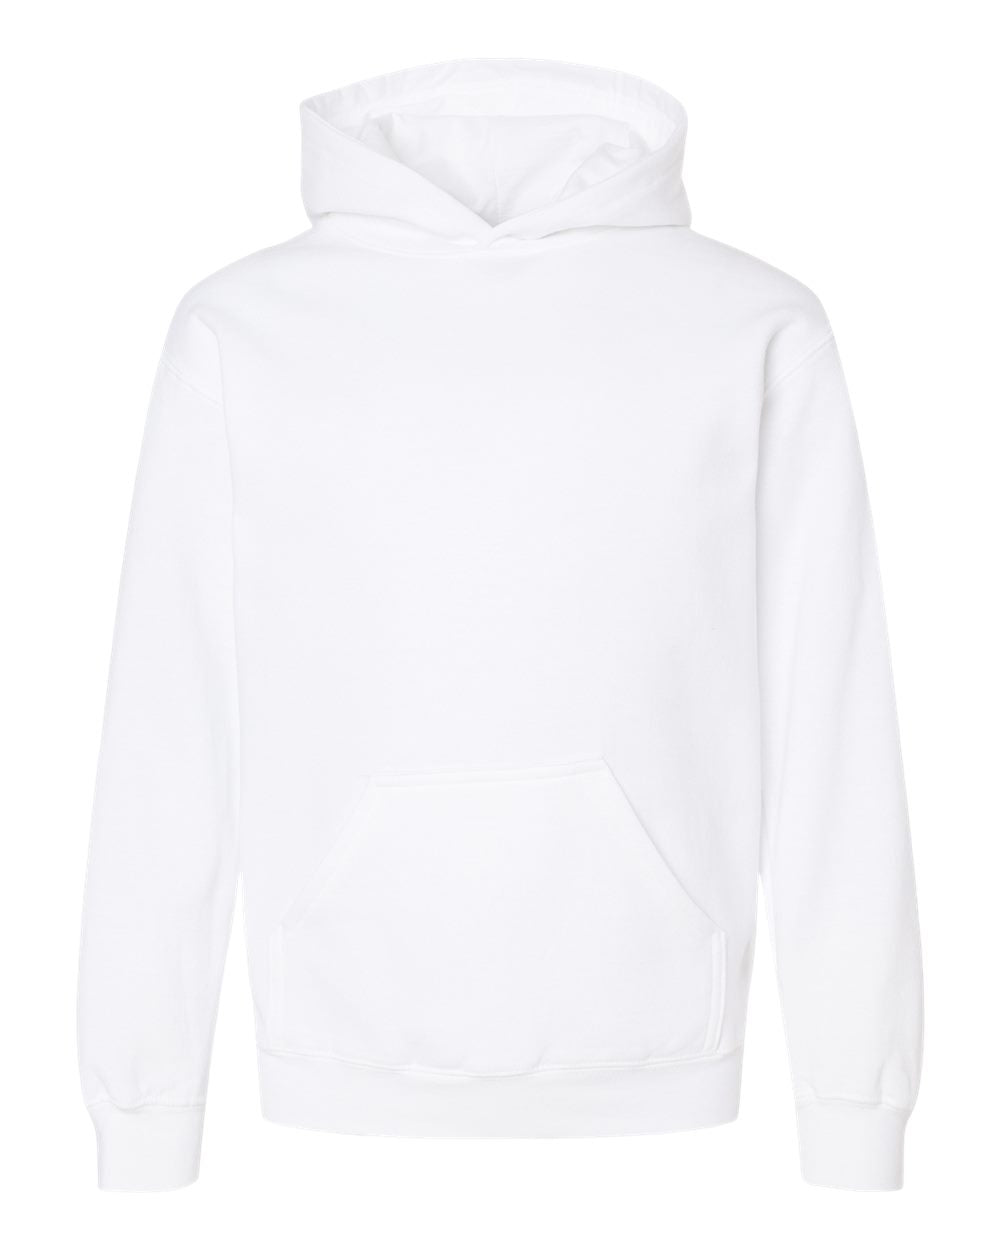 Tultex Youth Hooded Sweatshirt - White